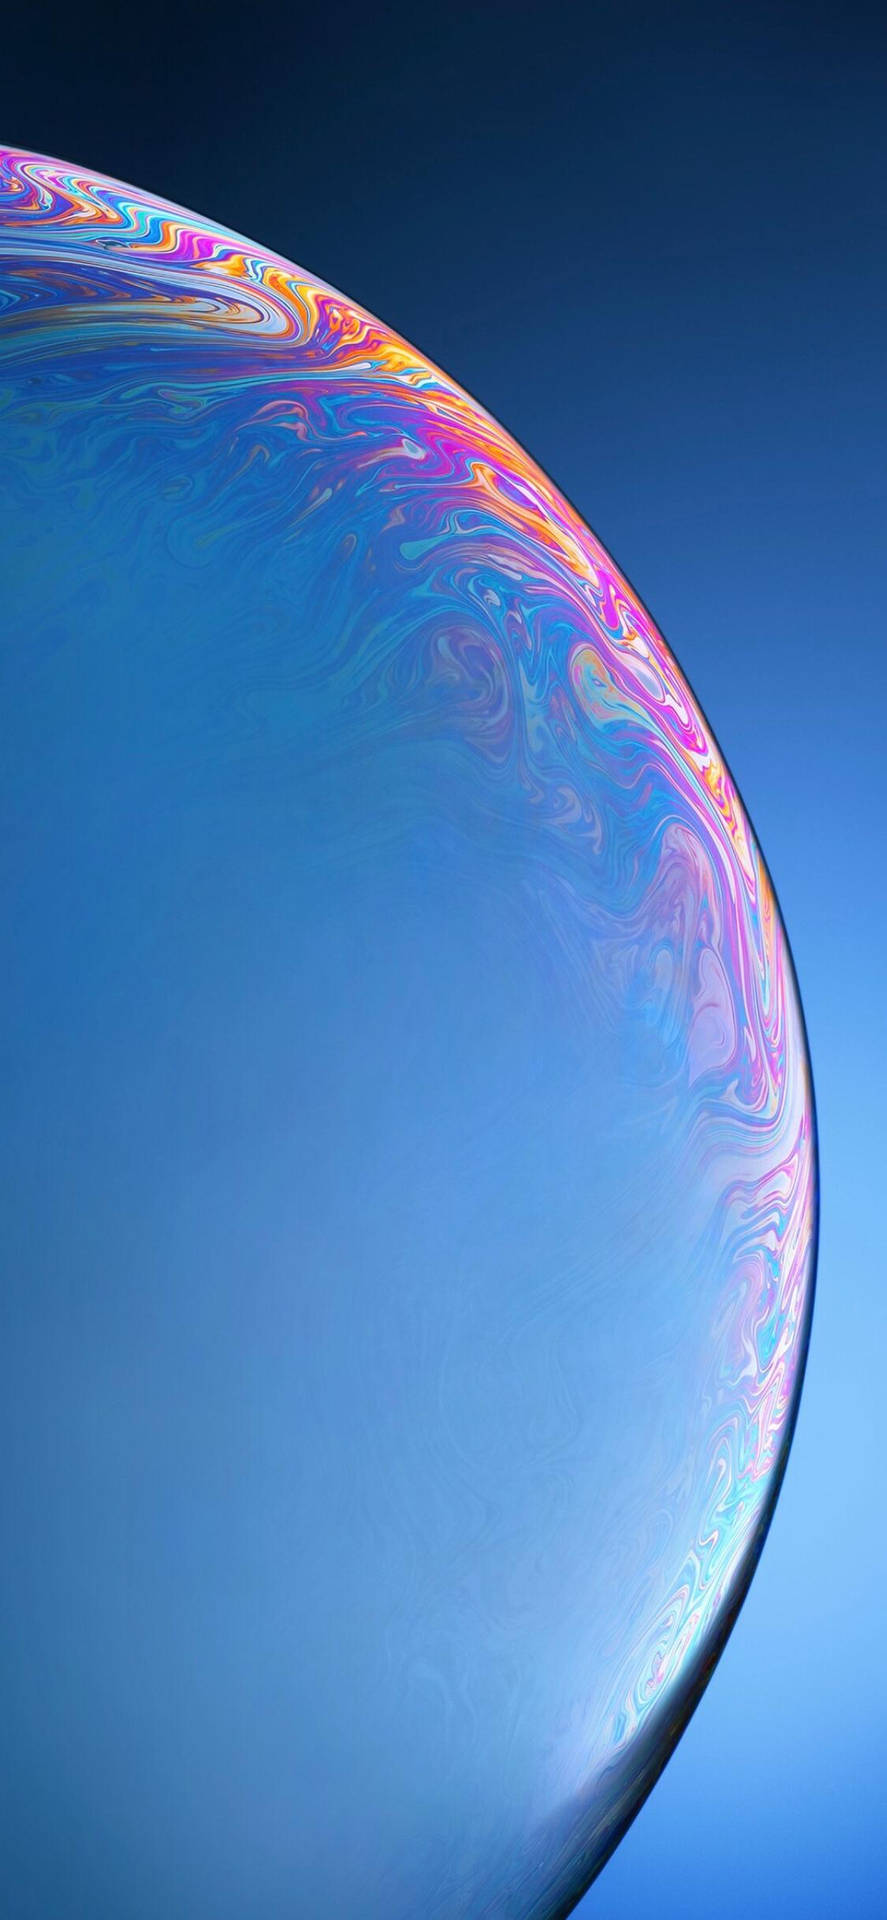 Aesthetic Bubble Iphone Xr Wallpaper